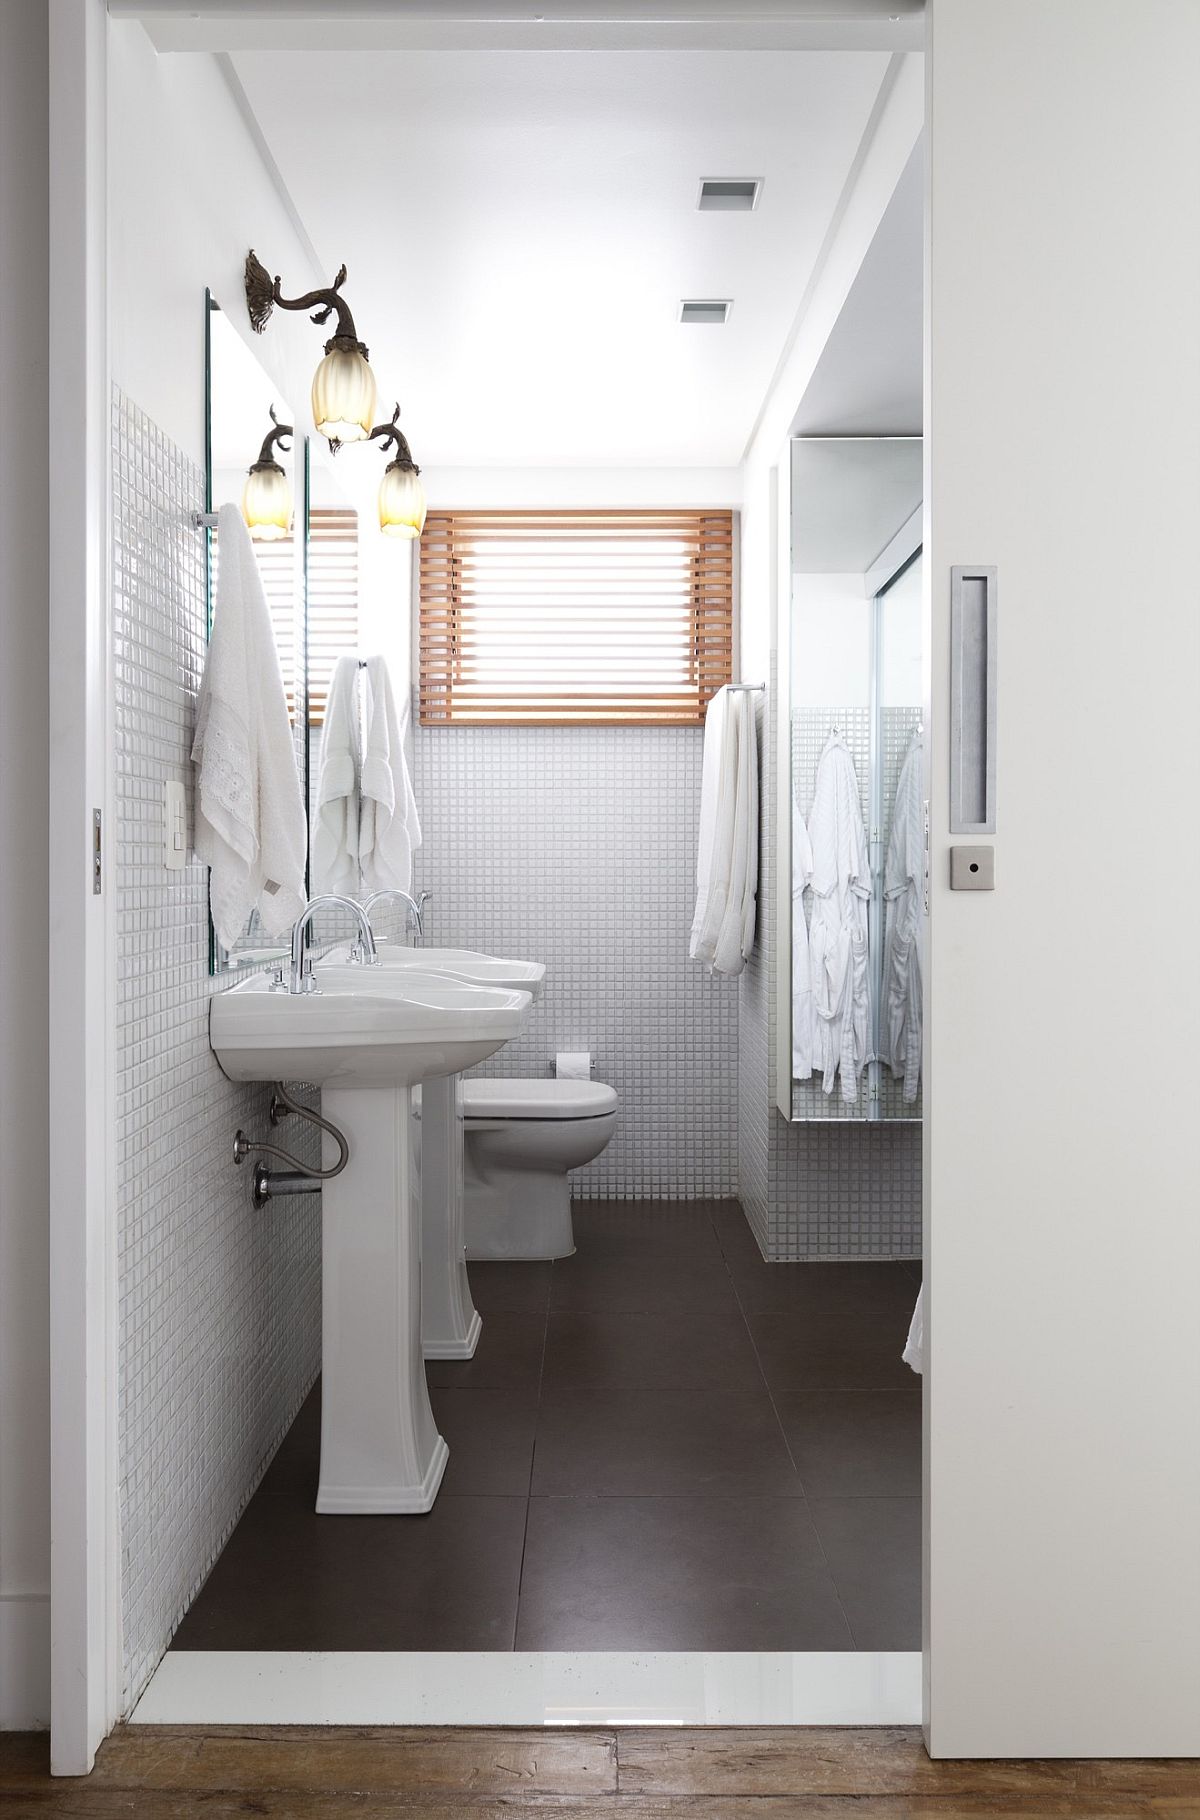 Space-savvy modern bathroom in white with dark flooring